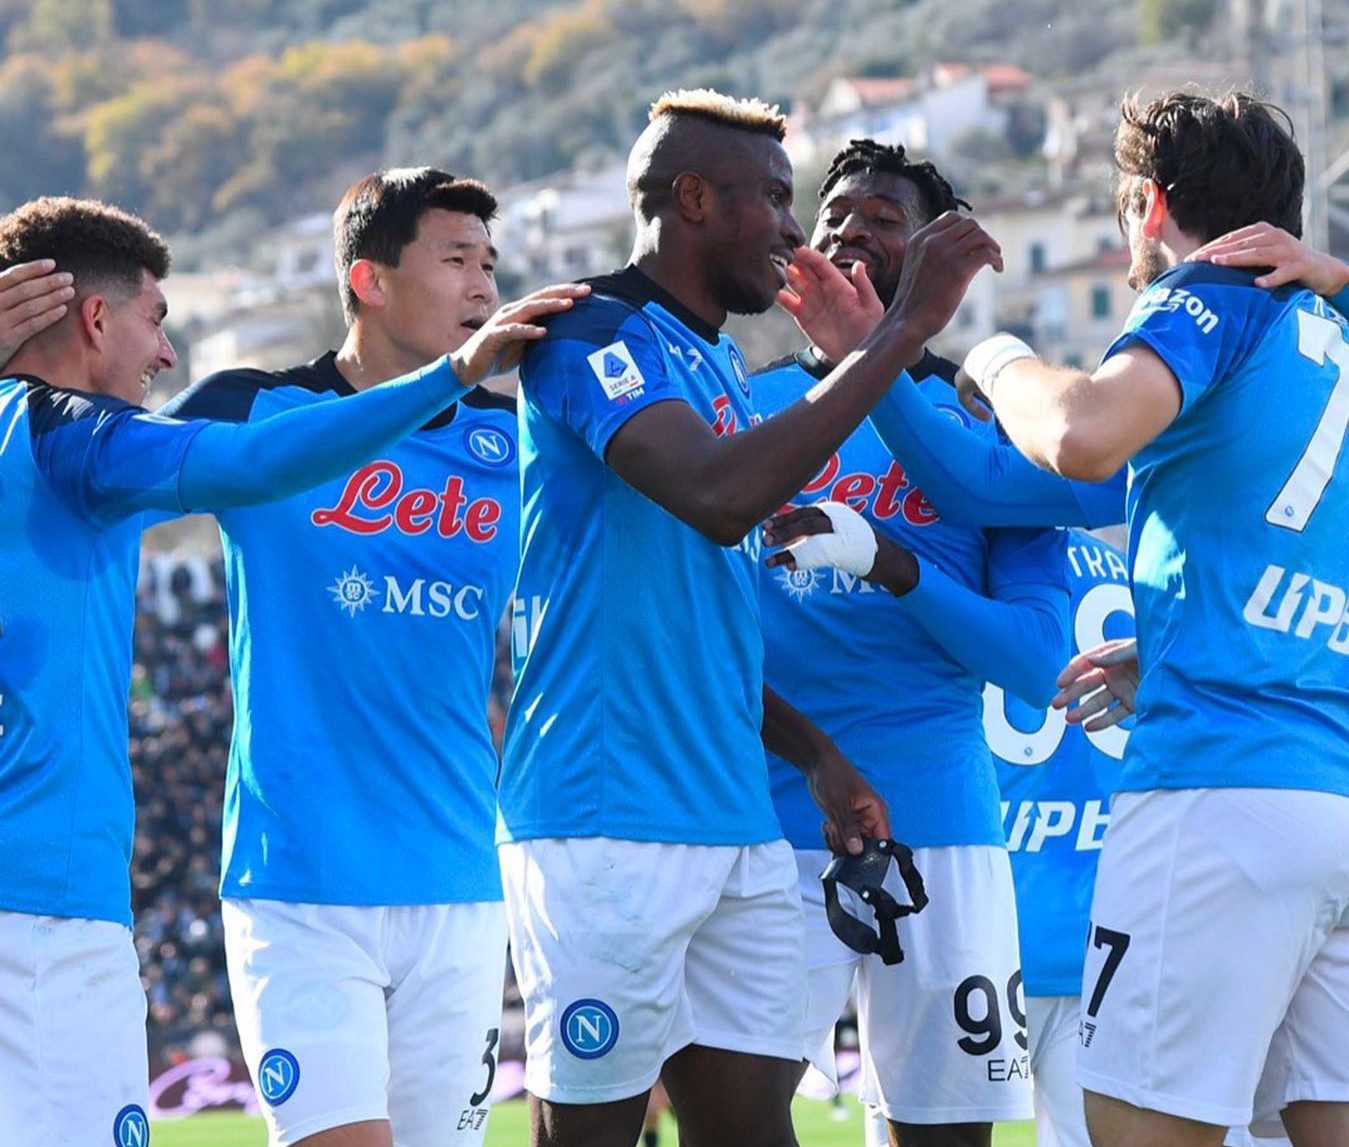 Calcio Napoli a valanga: Kvara e Osimhen abbattono lo Spezia